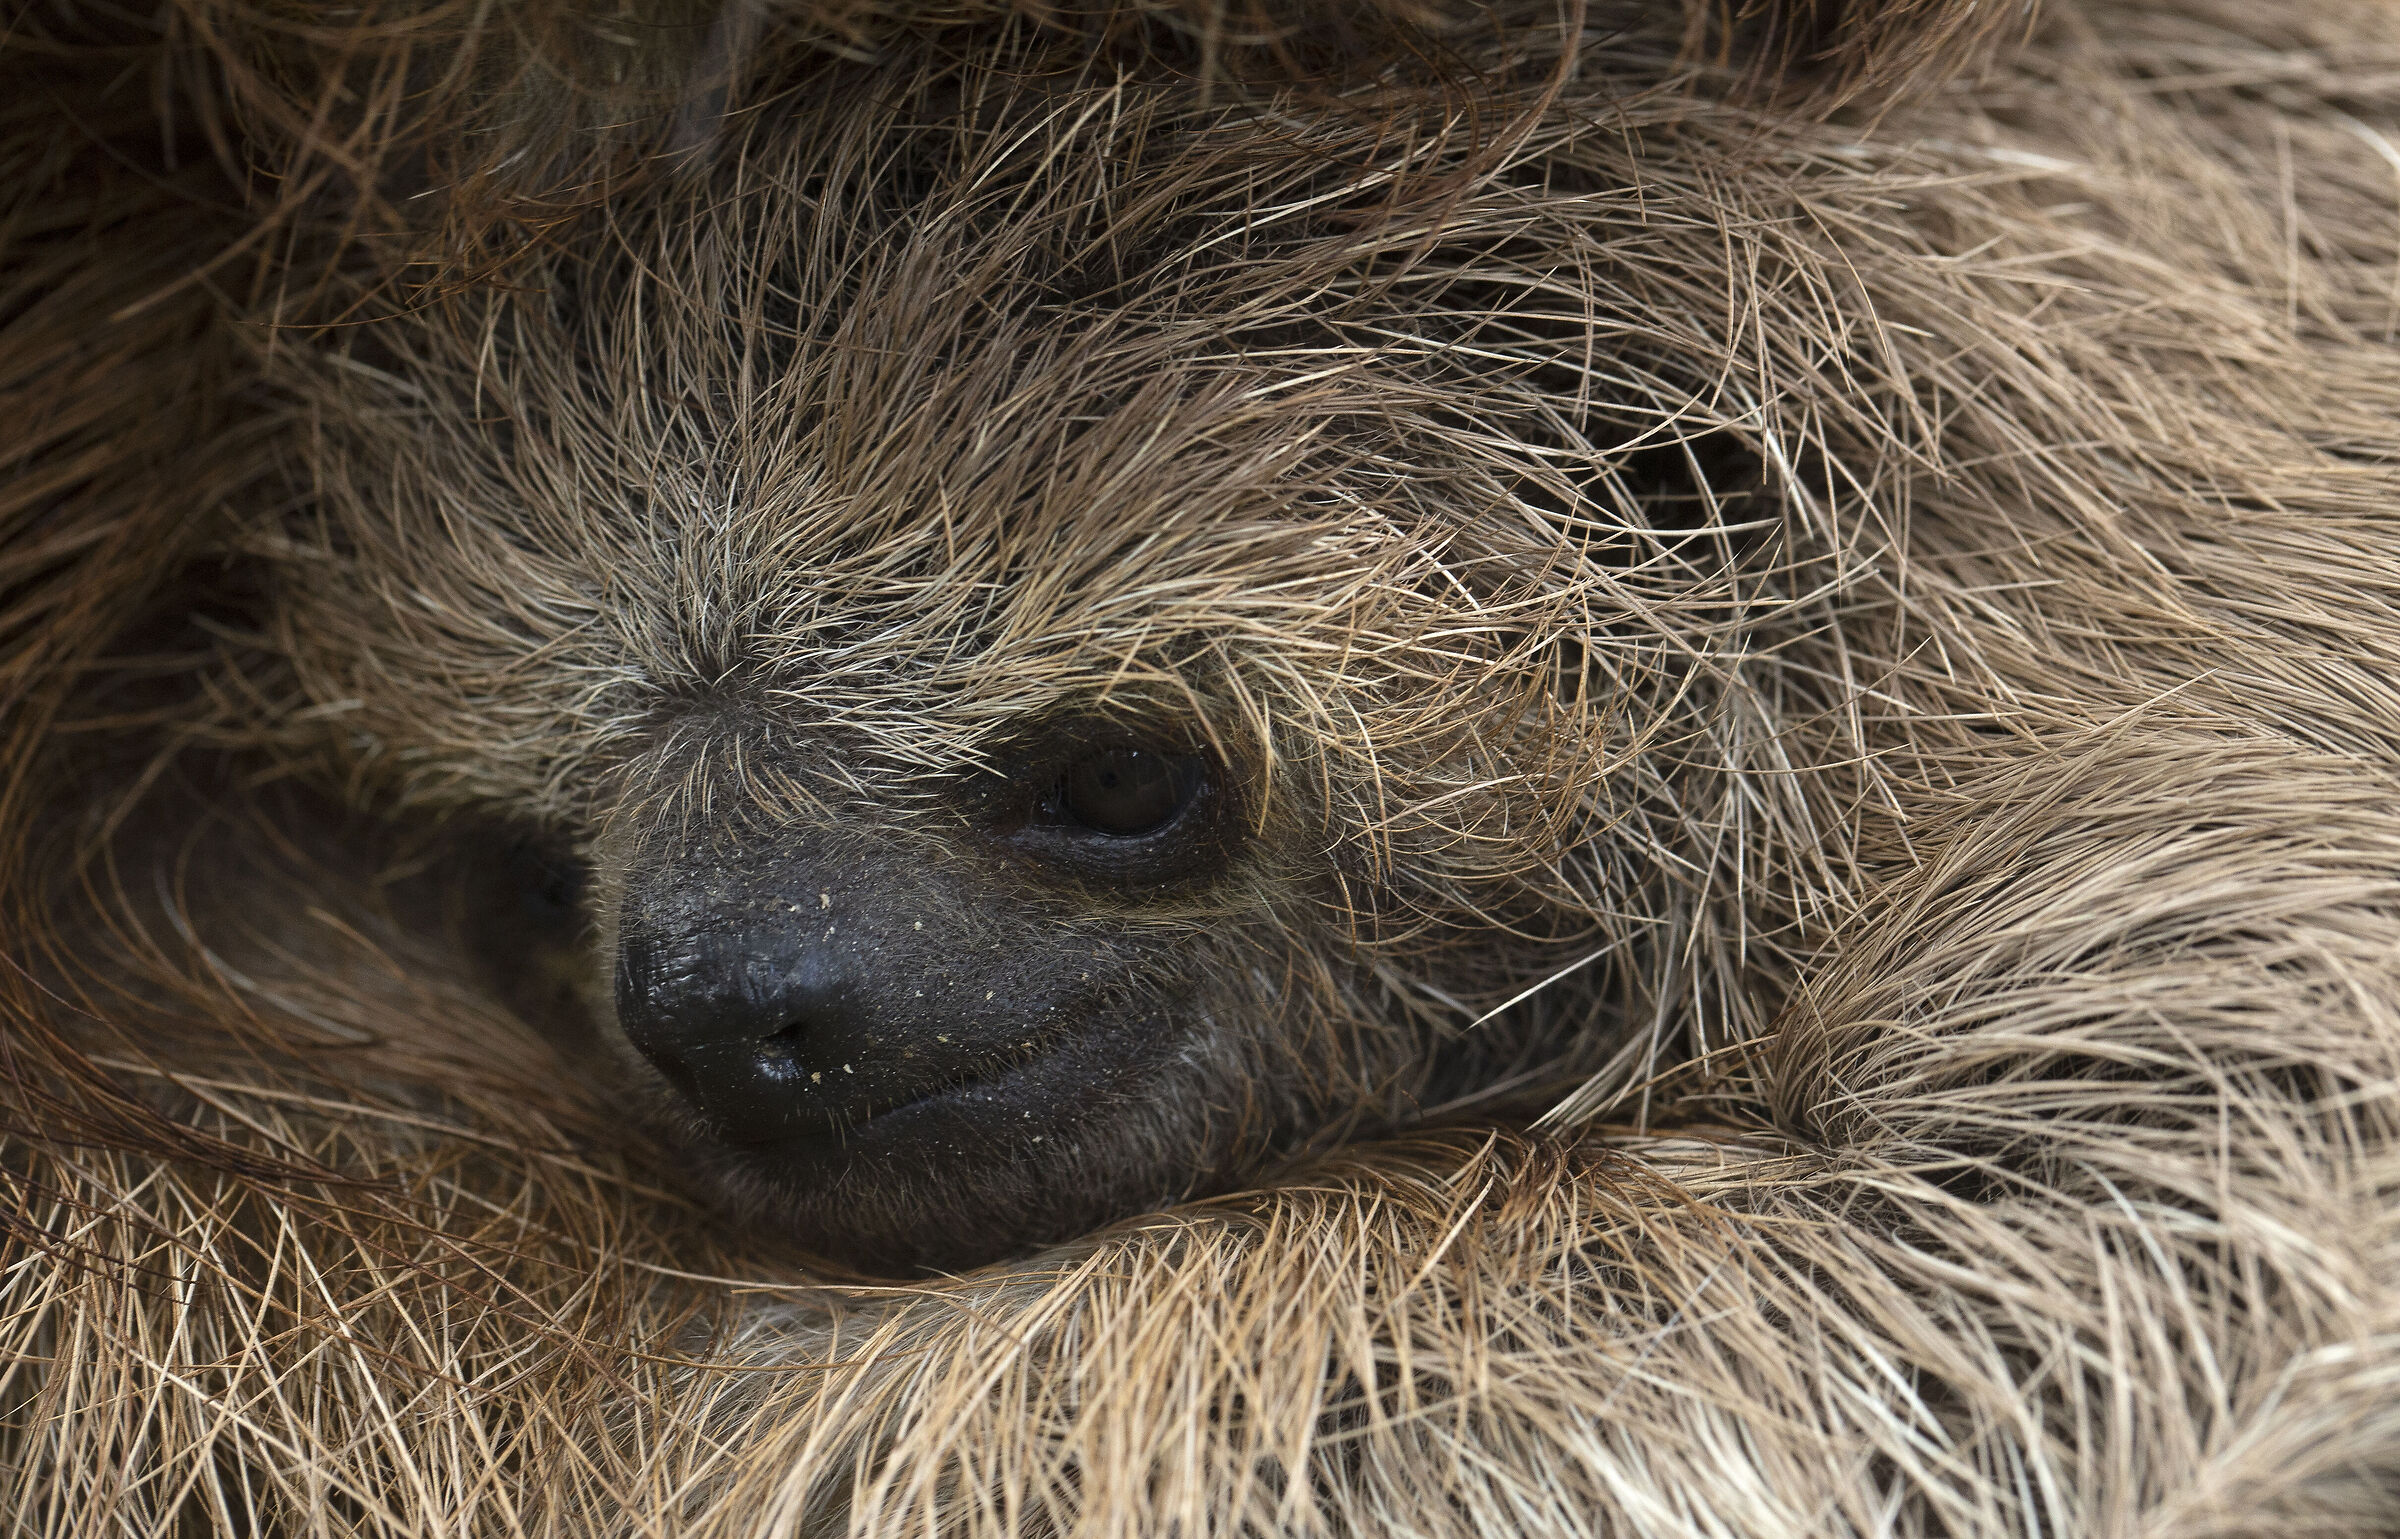 Baby sloth...